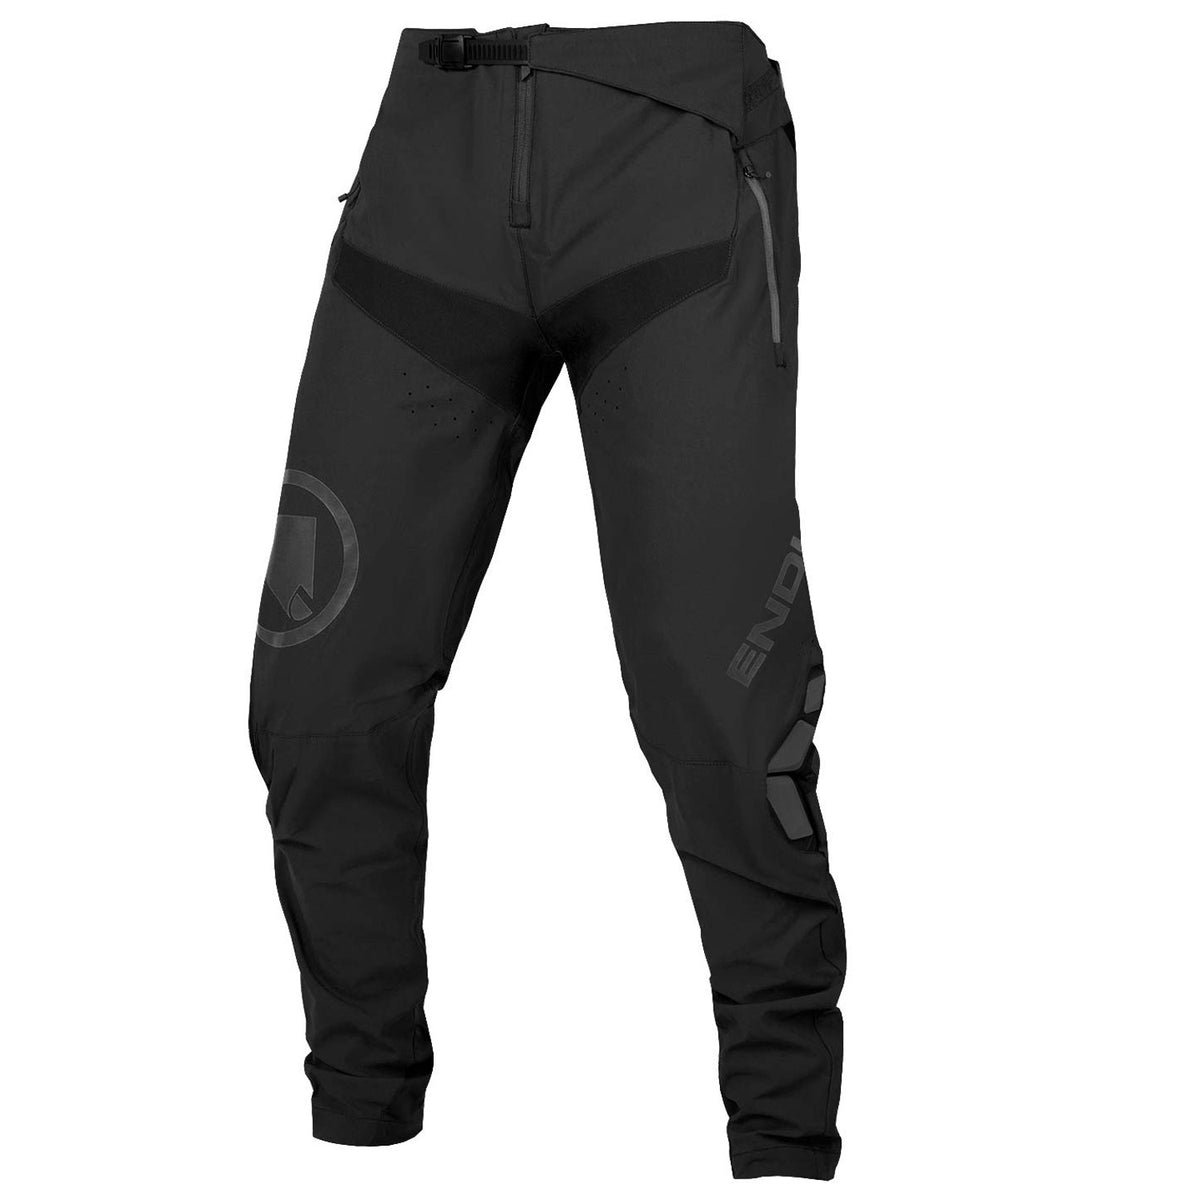 Pantalones Endura Burner II - Negro All4cycling